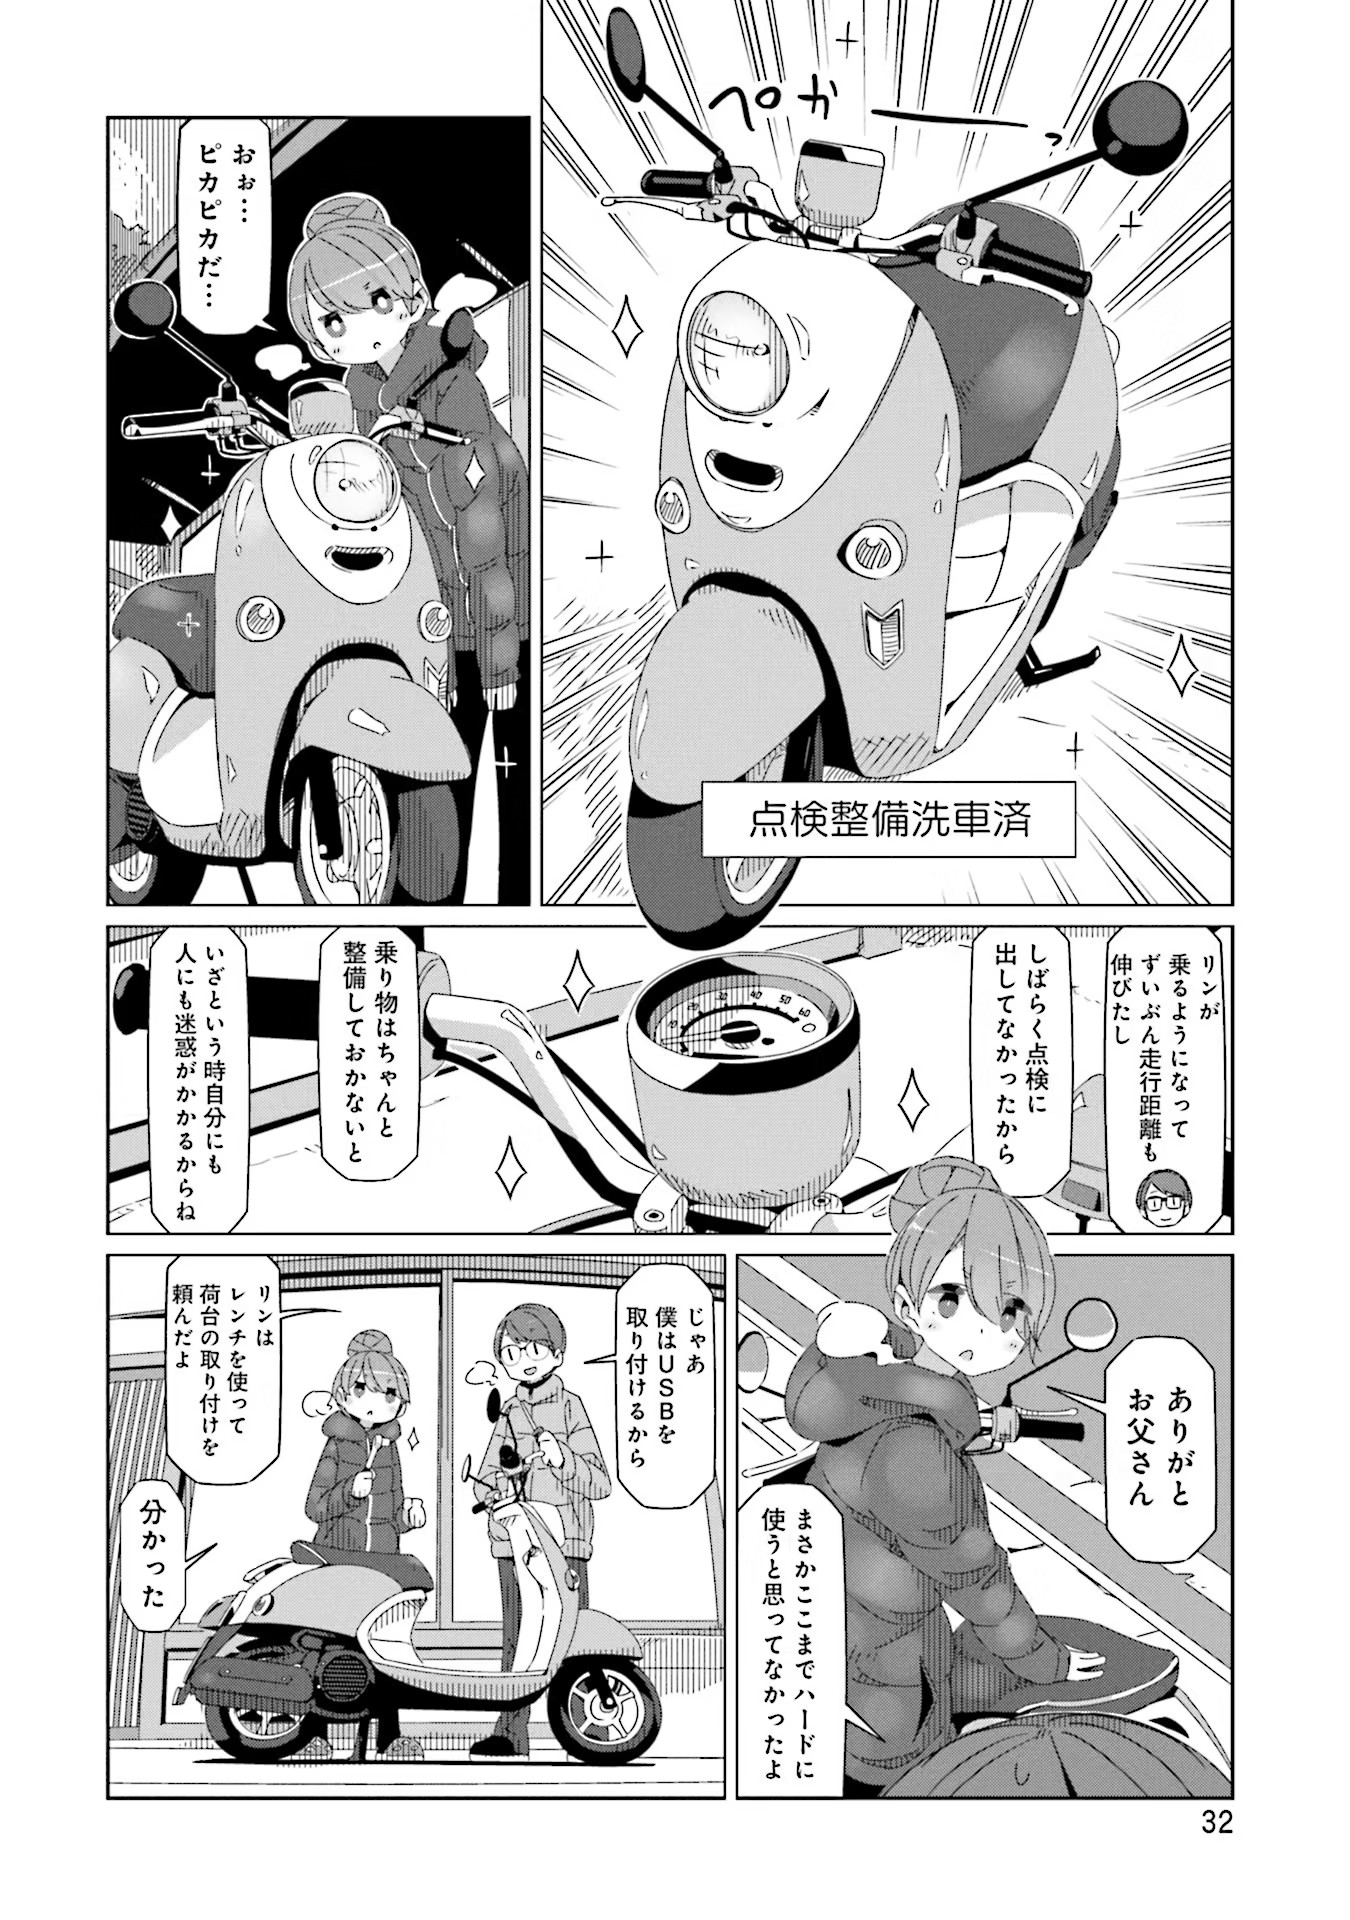 Yuru Camp - Chapter 42 - Page 4